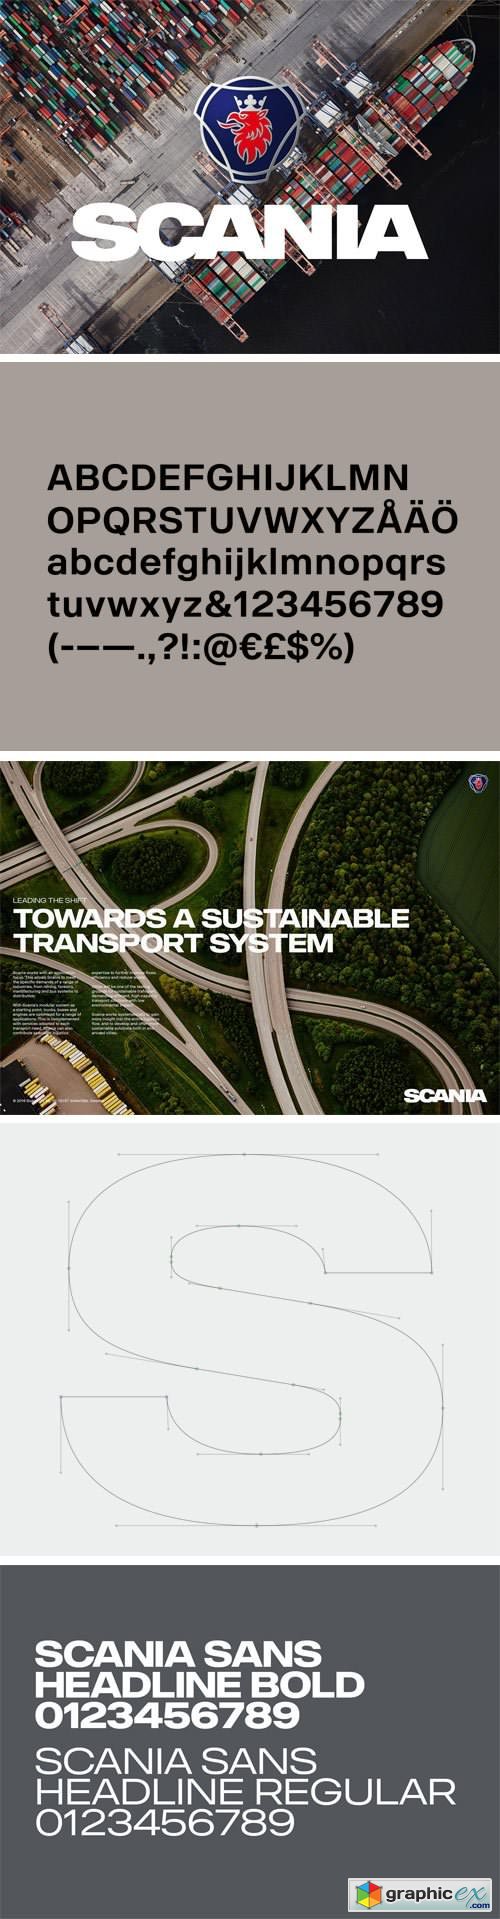 Scania Sans Font Family